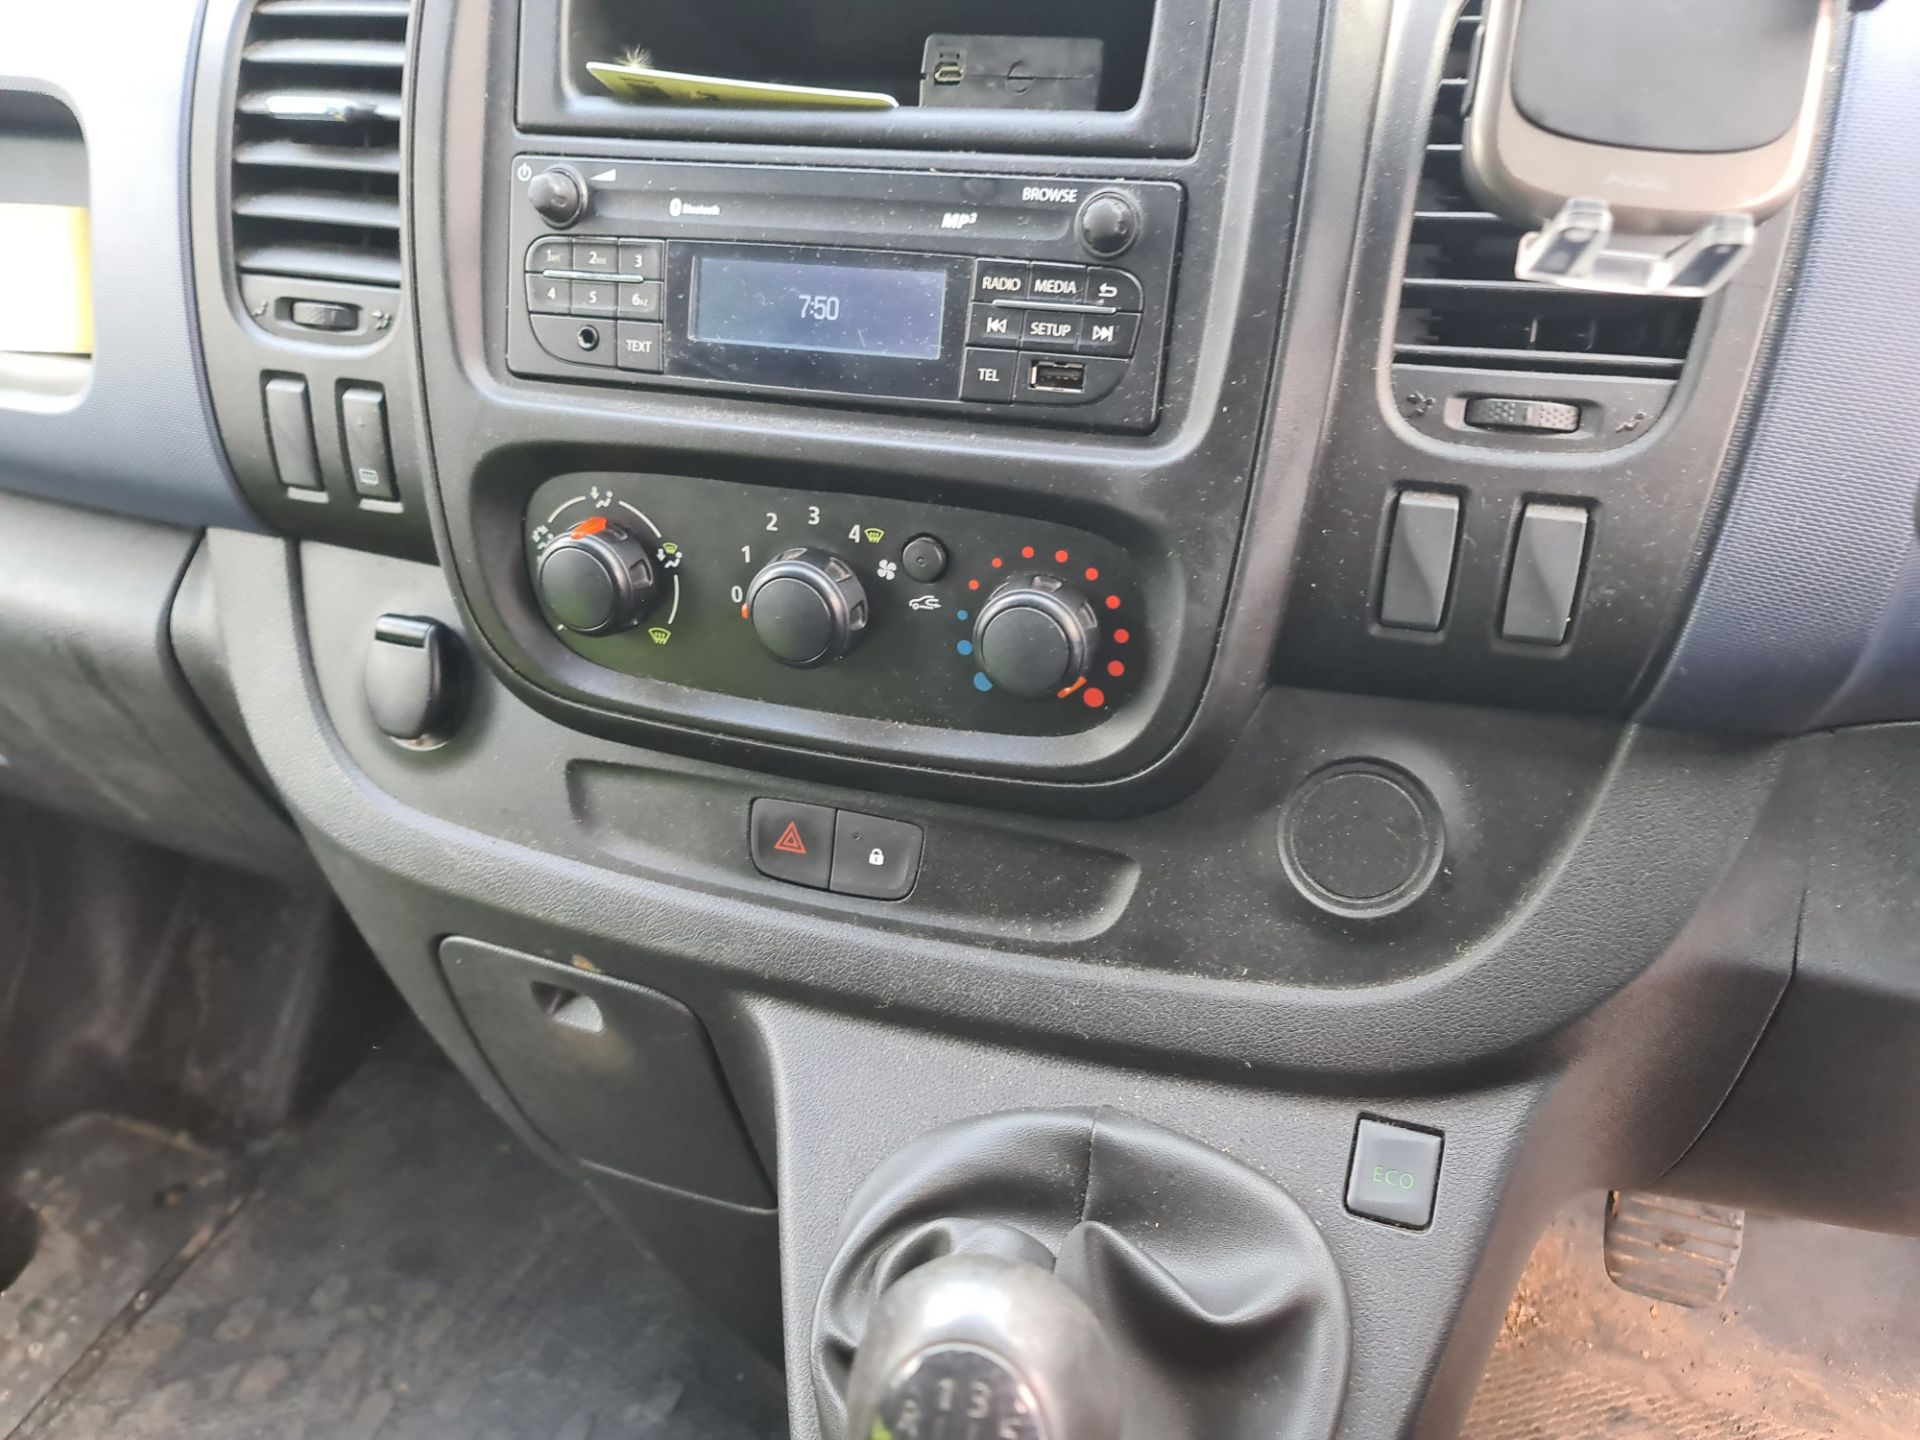 2015 Vauxhall Vivaro 2900 CDTi panel van - Image 74 of 81